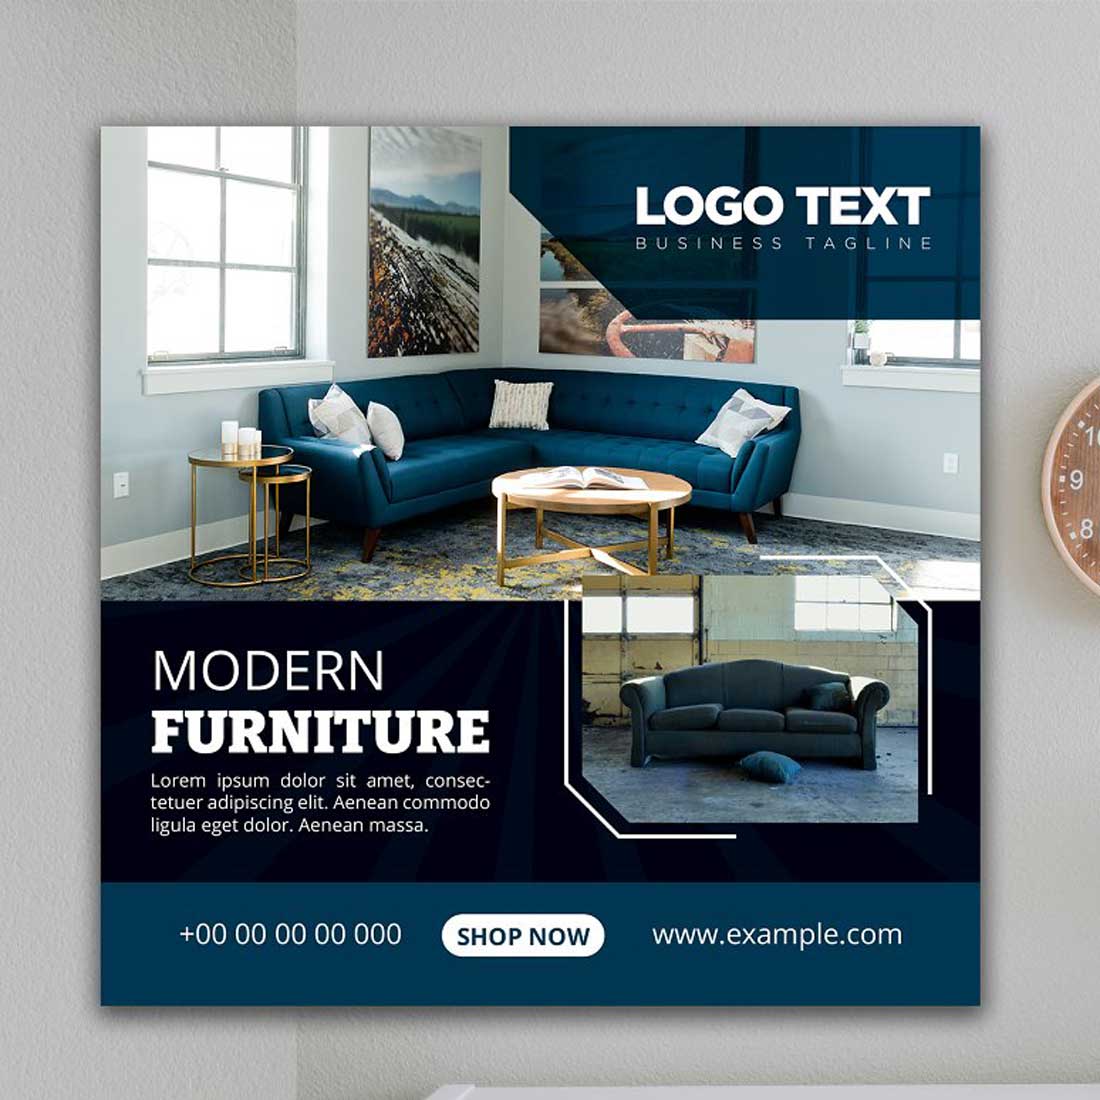 Furniture Sale Social Media Banner preview image.